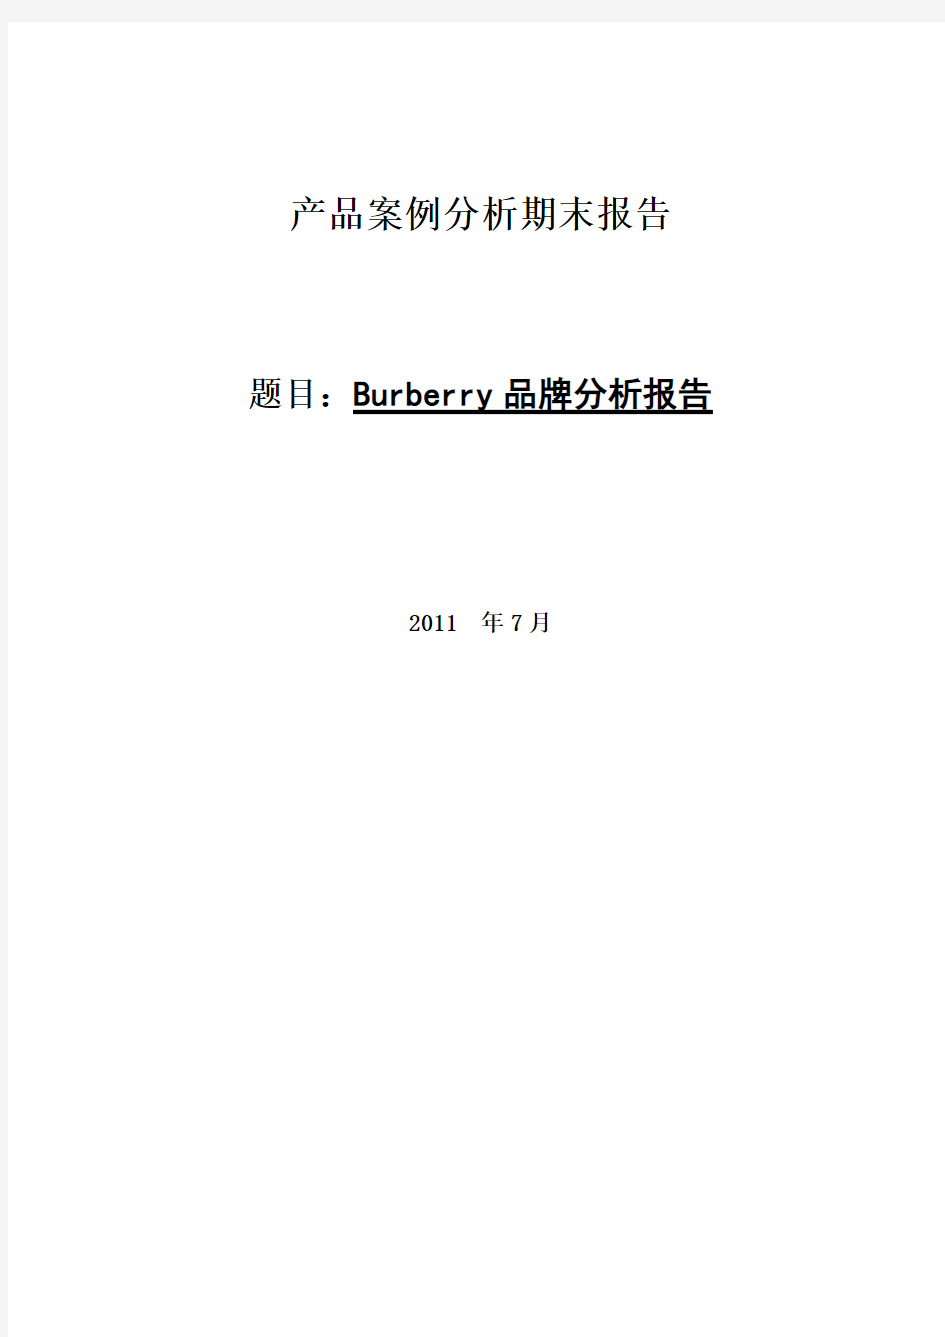 Burberry产品案例分析报告